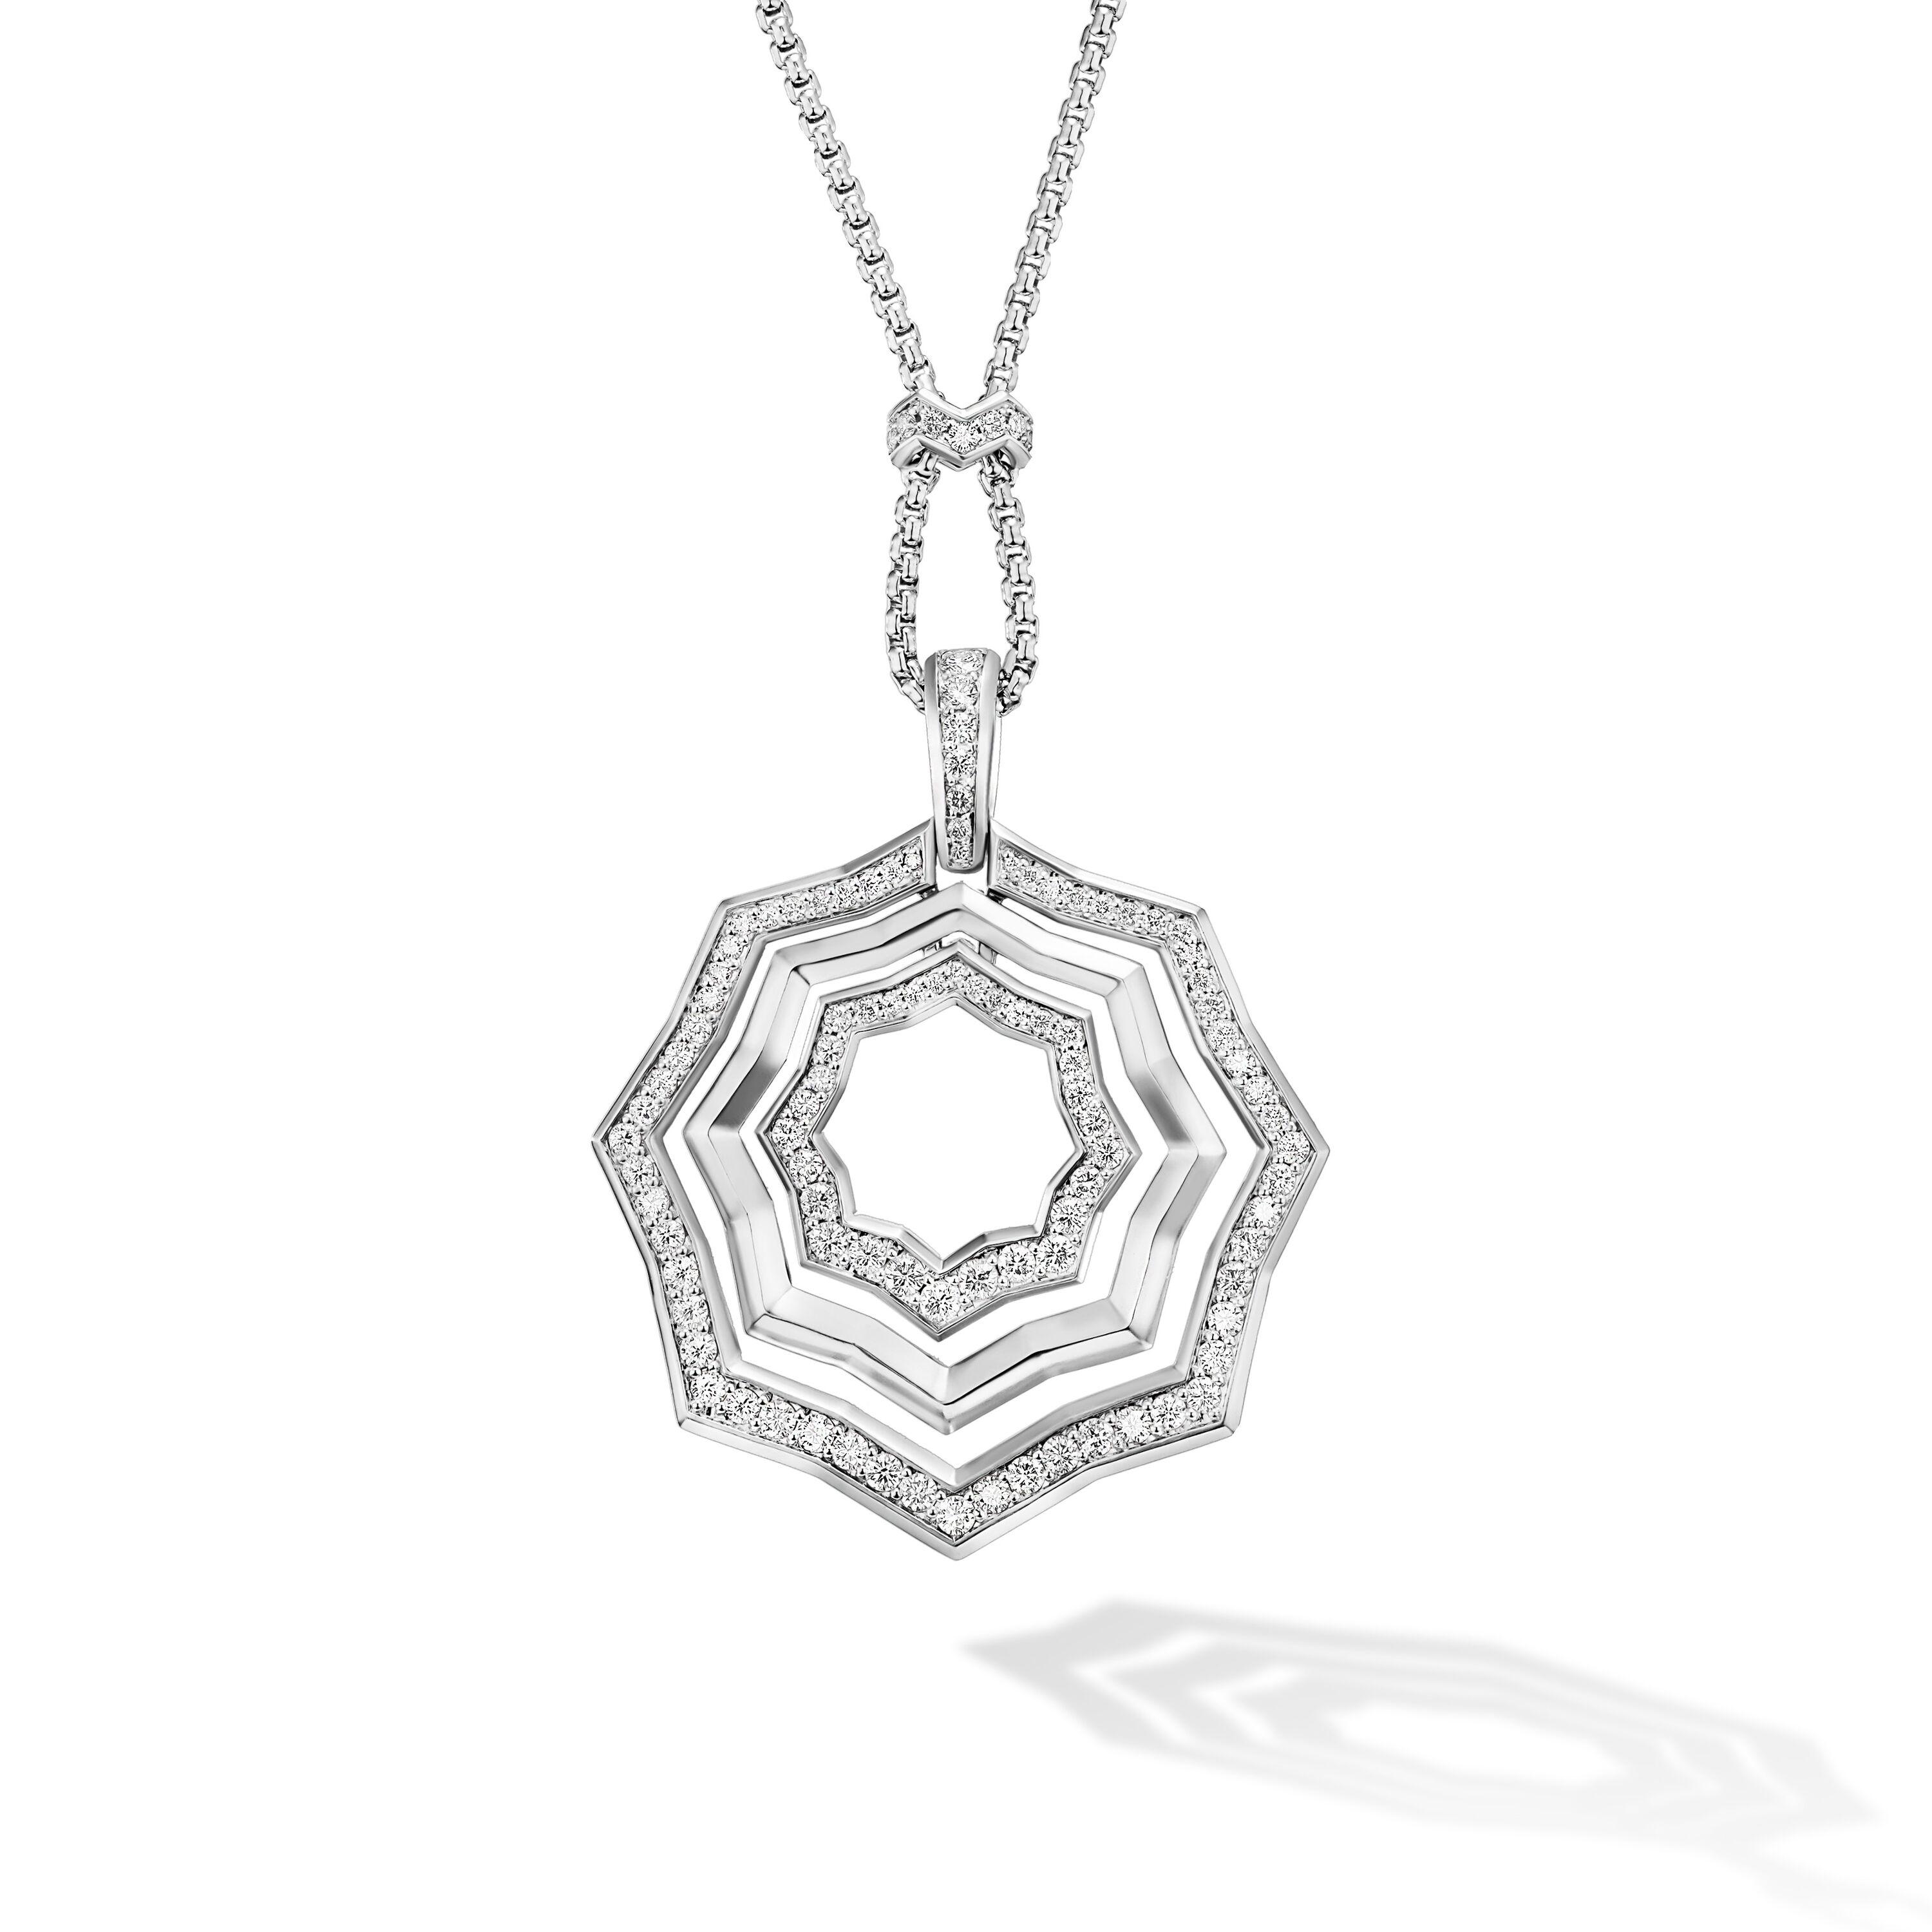 David Yurman Stax Zig Zag 38mm Sterling Silver Pendant Necklace with Diamonds